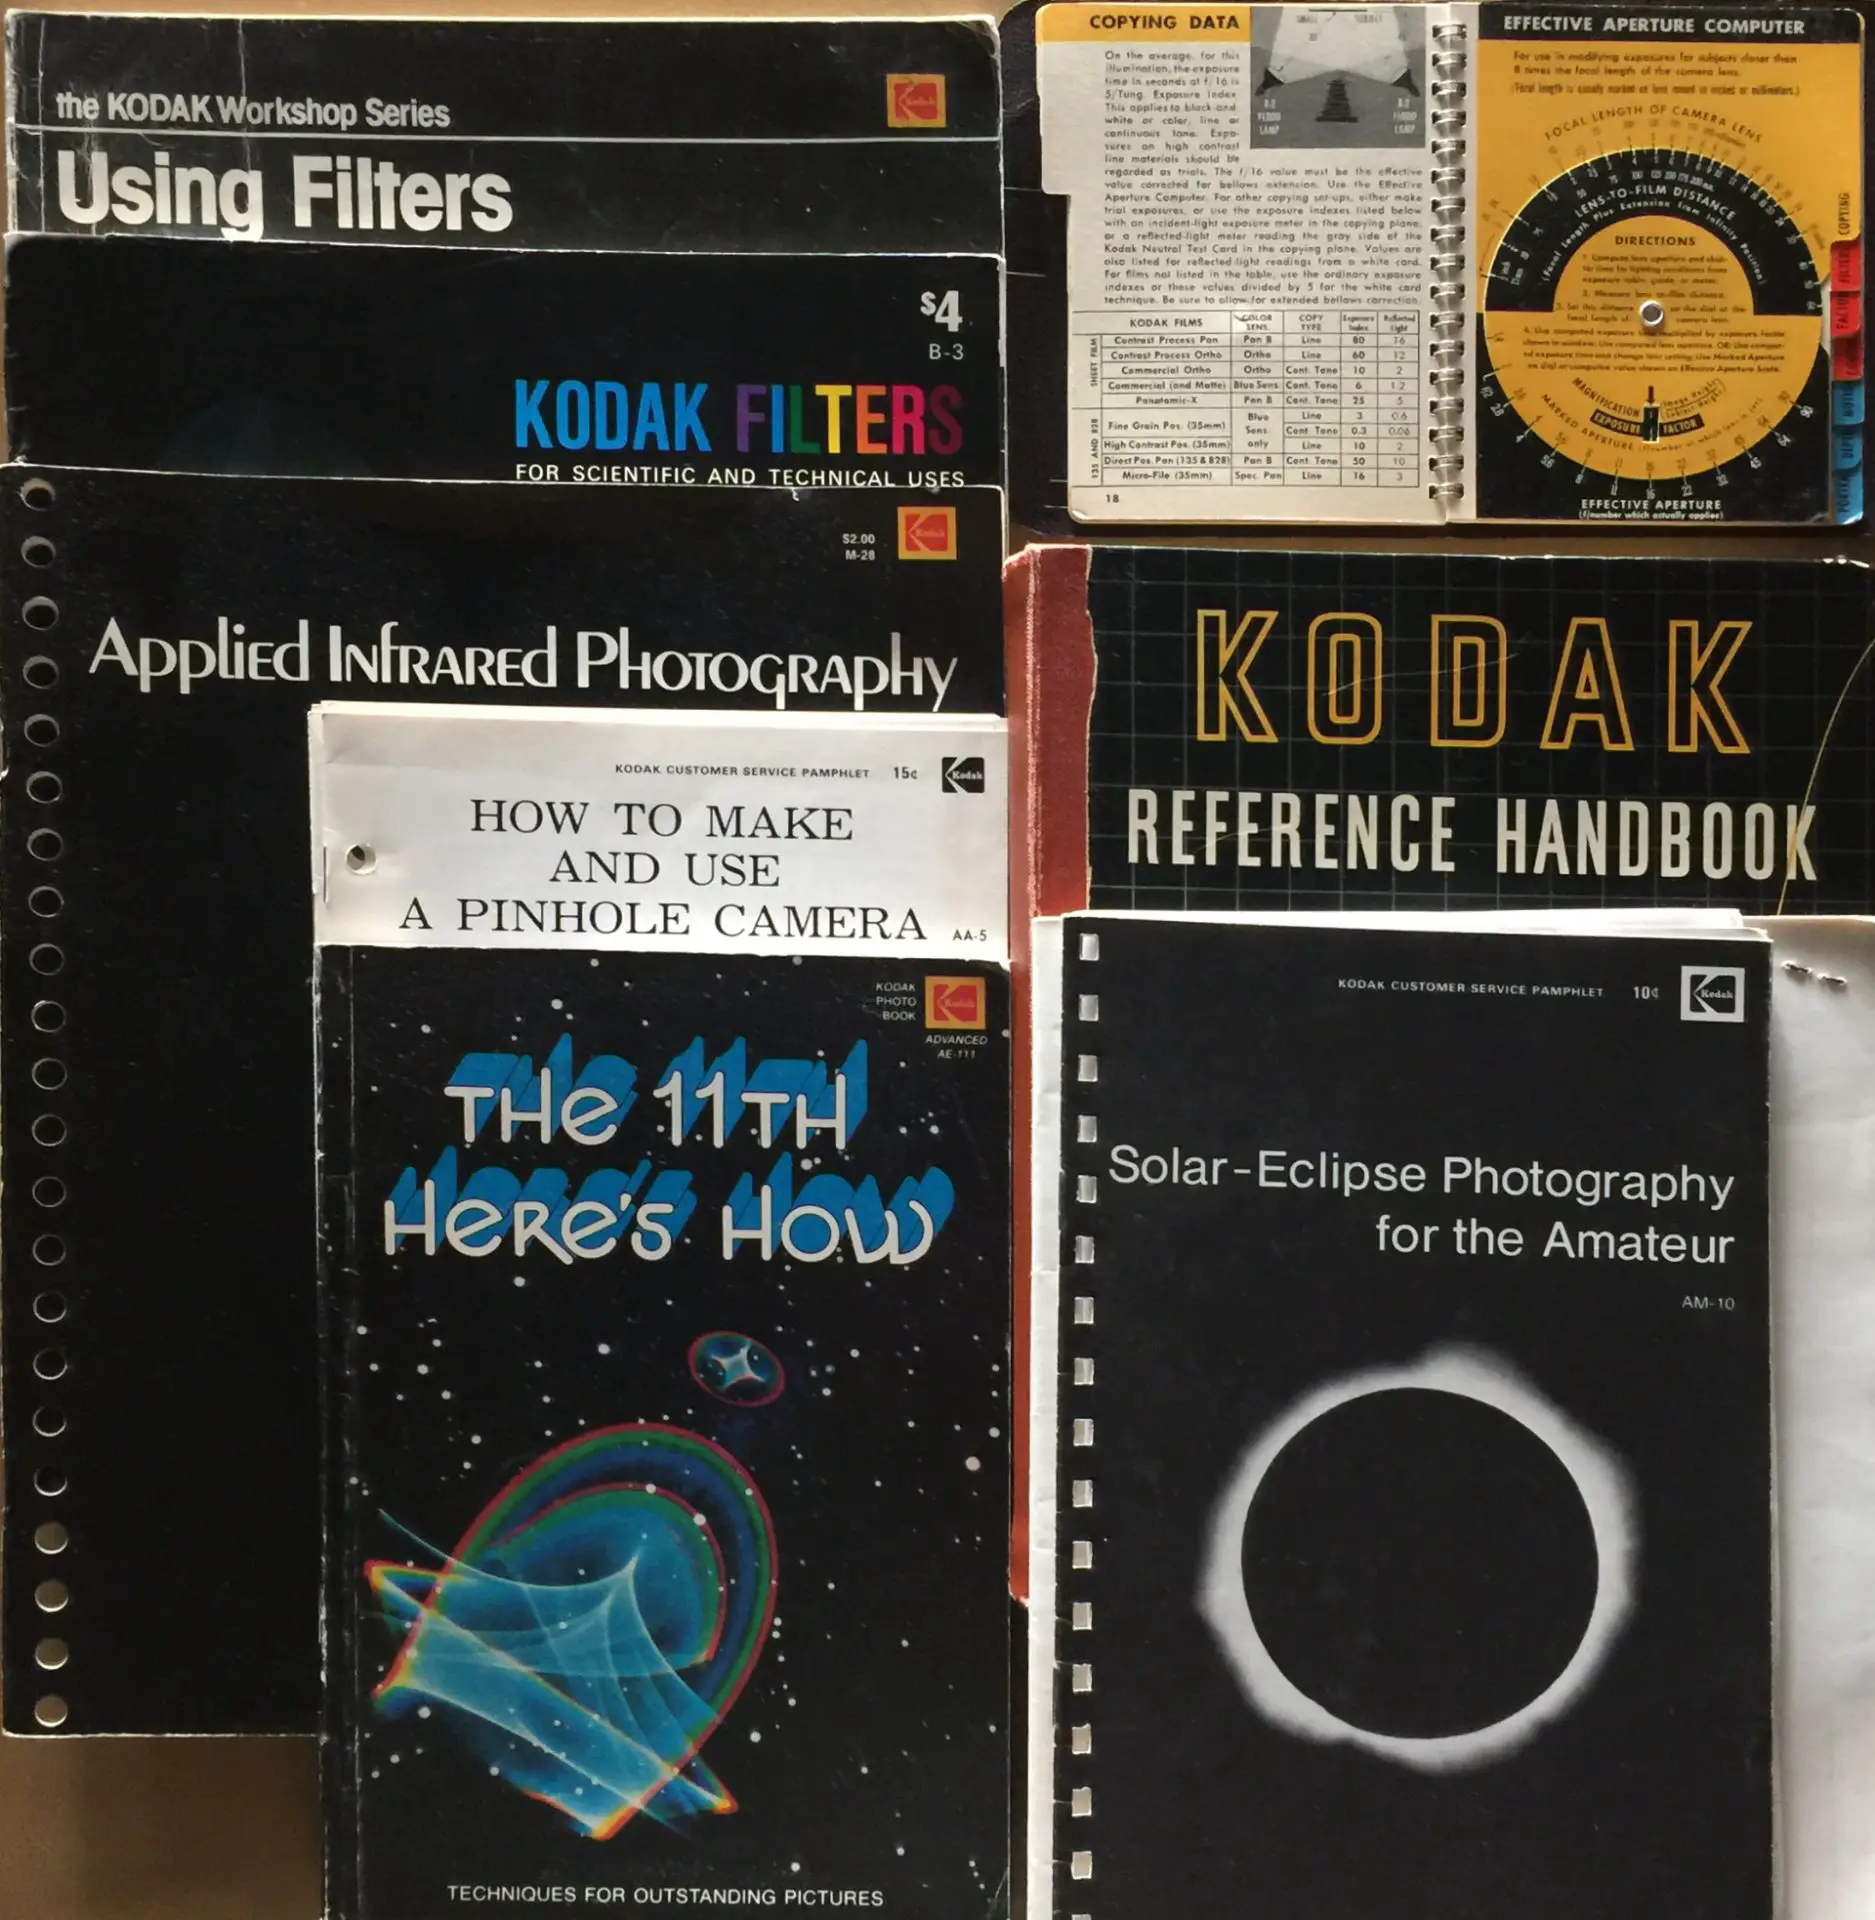 Miscellaneous Kodak ephemera